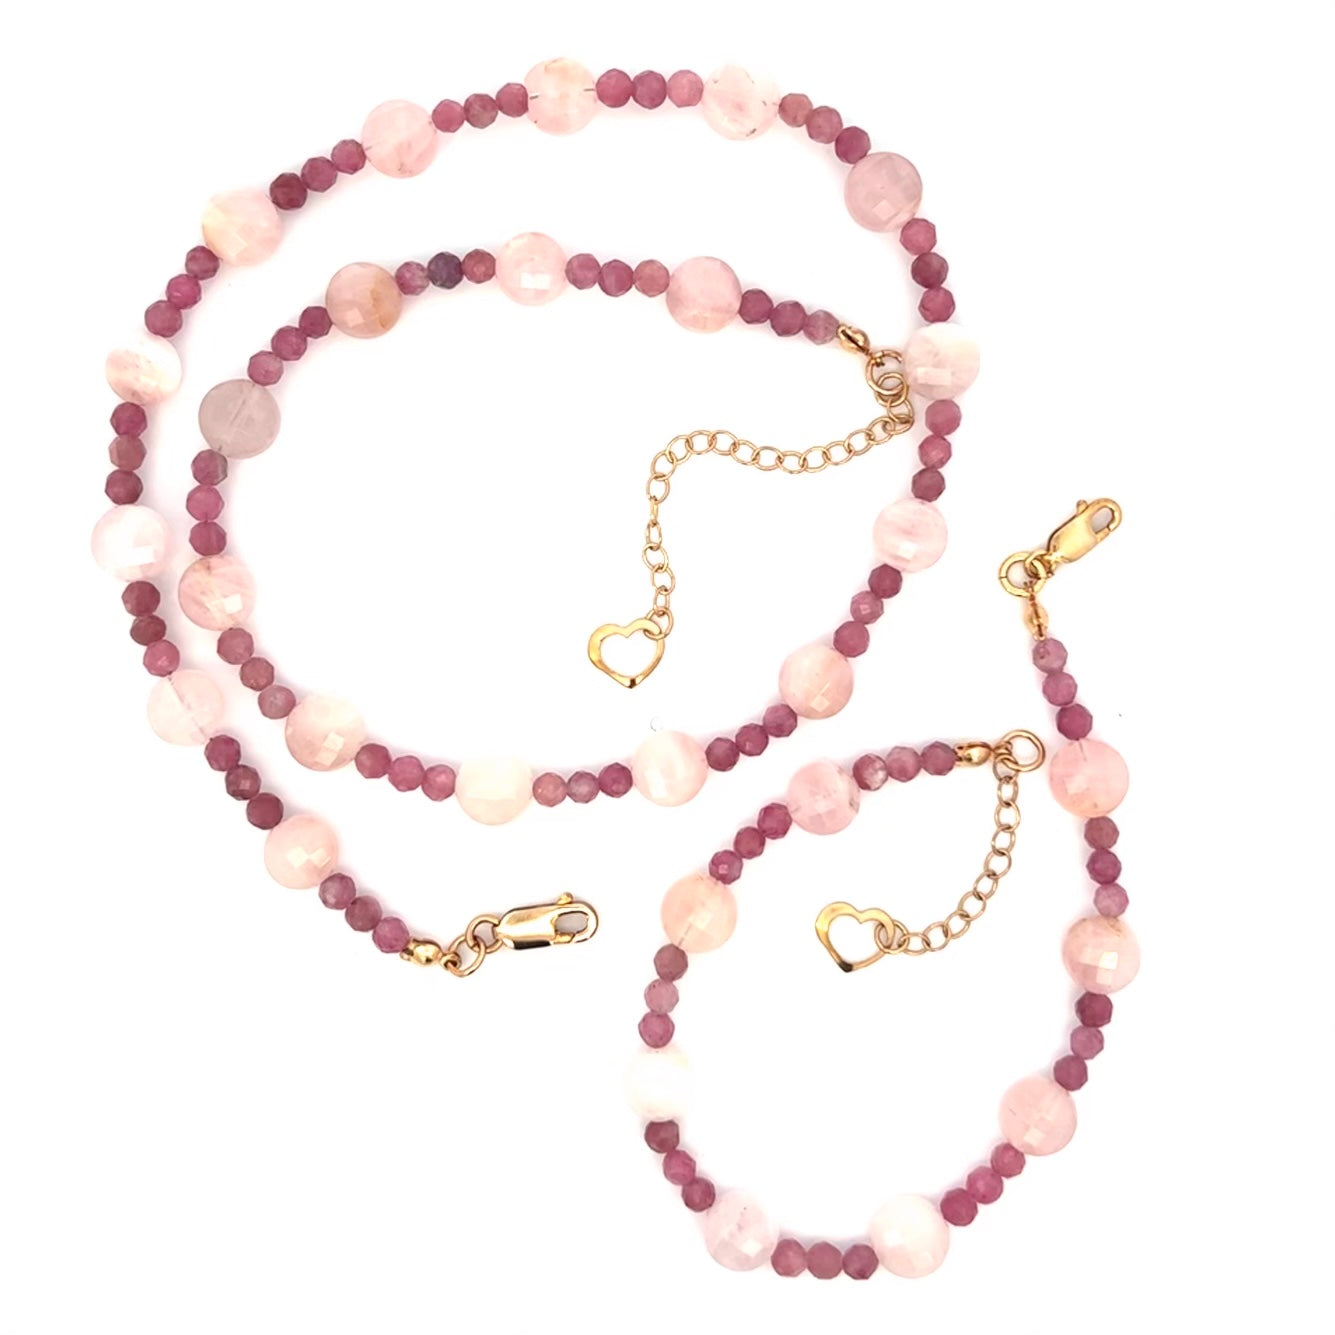 Madagascar Rose Quartz And Pink Tourmaline Necklace and Bracelet Set 14k GF Heart Charms